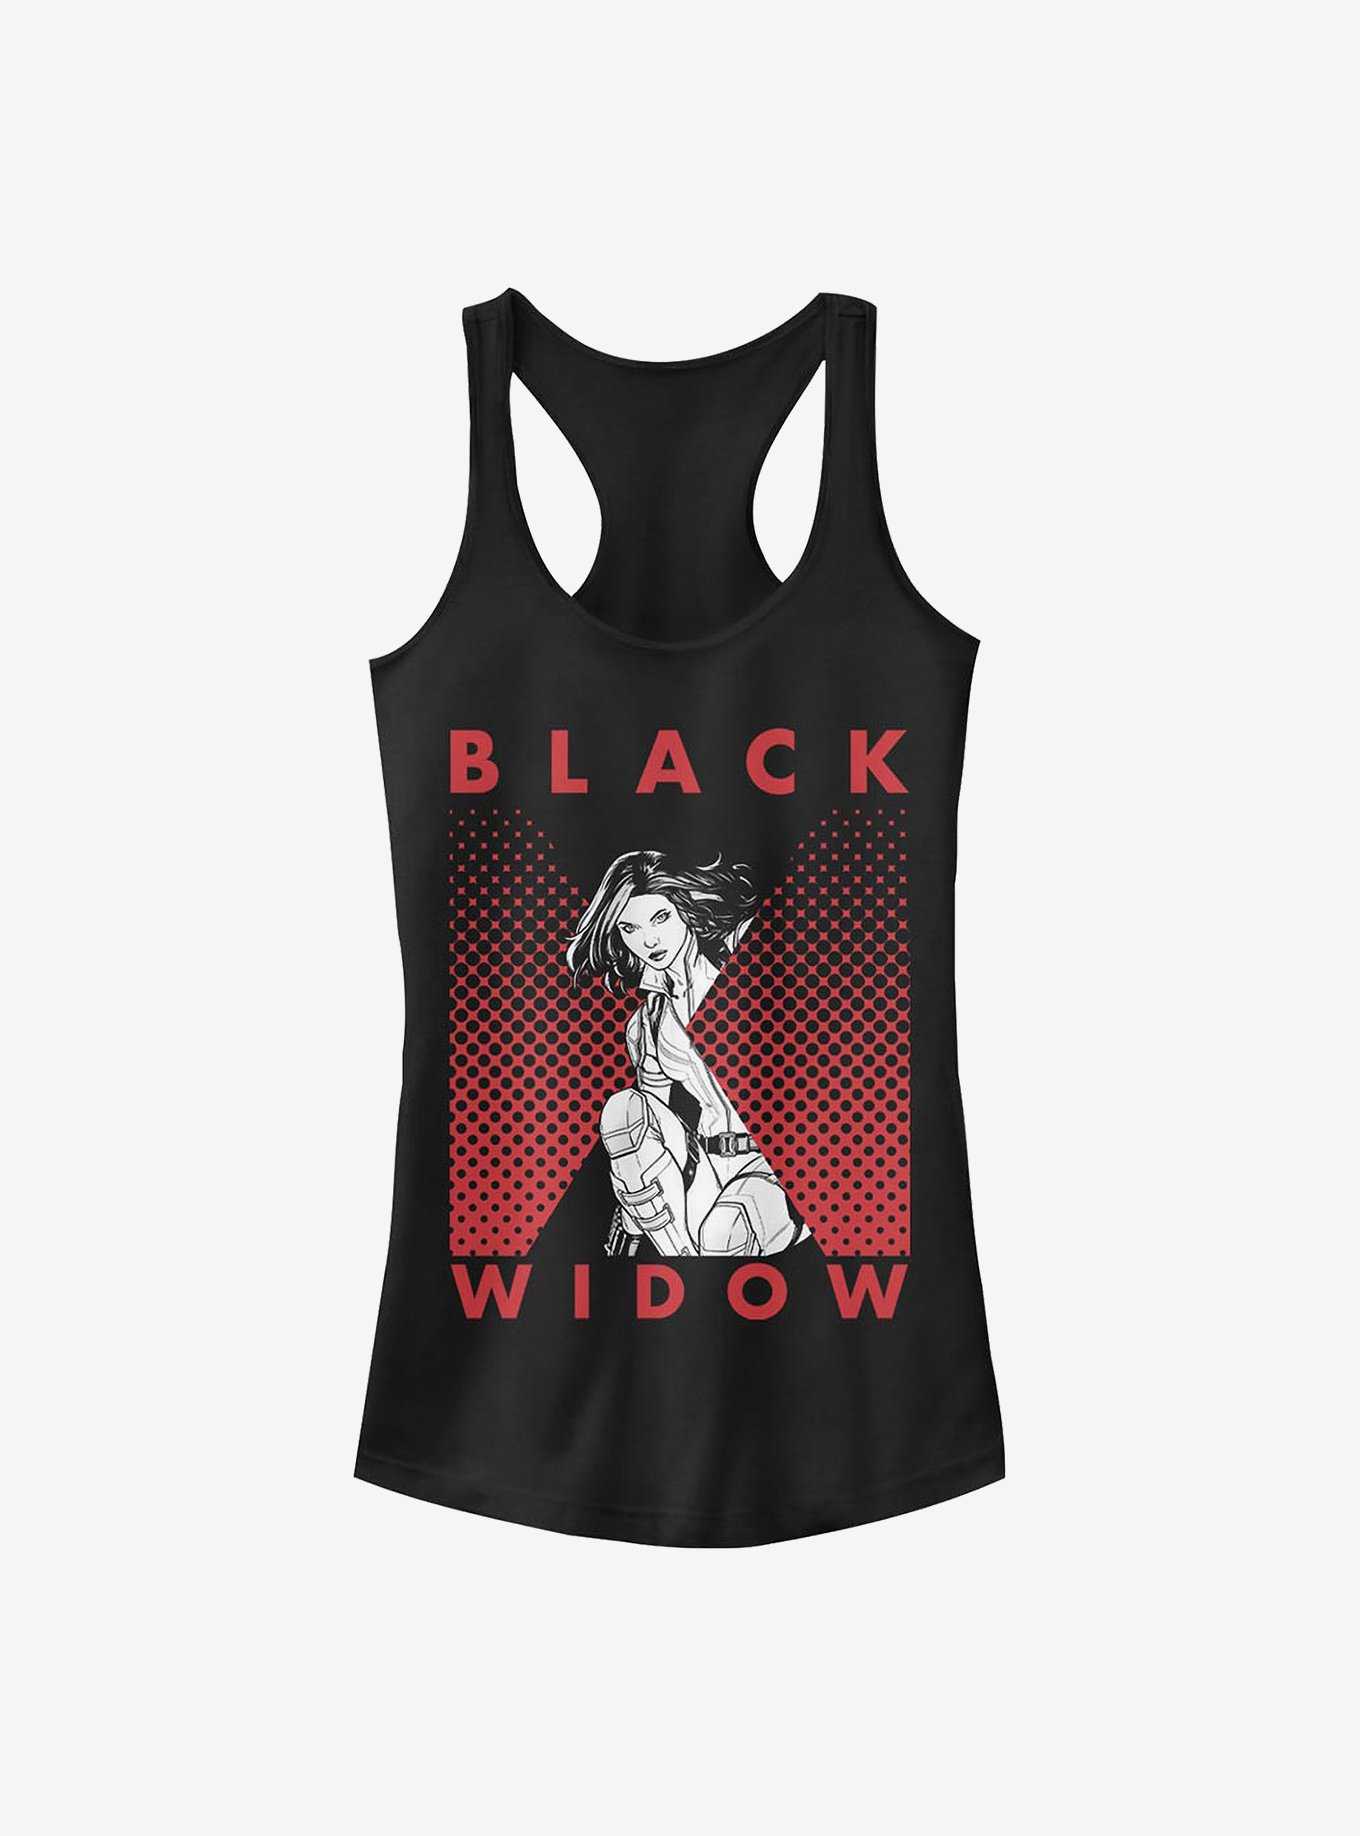 Marvel Black Widow Halftone Black Widow Girls Tank, , hi-res